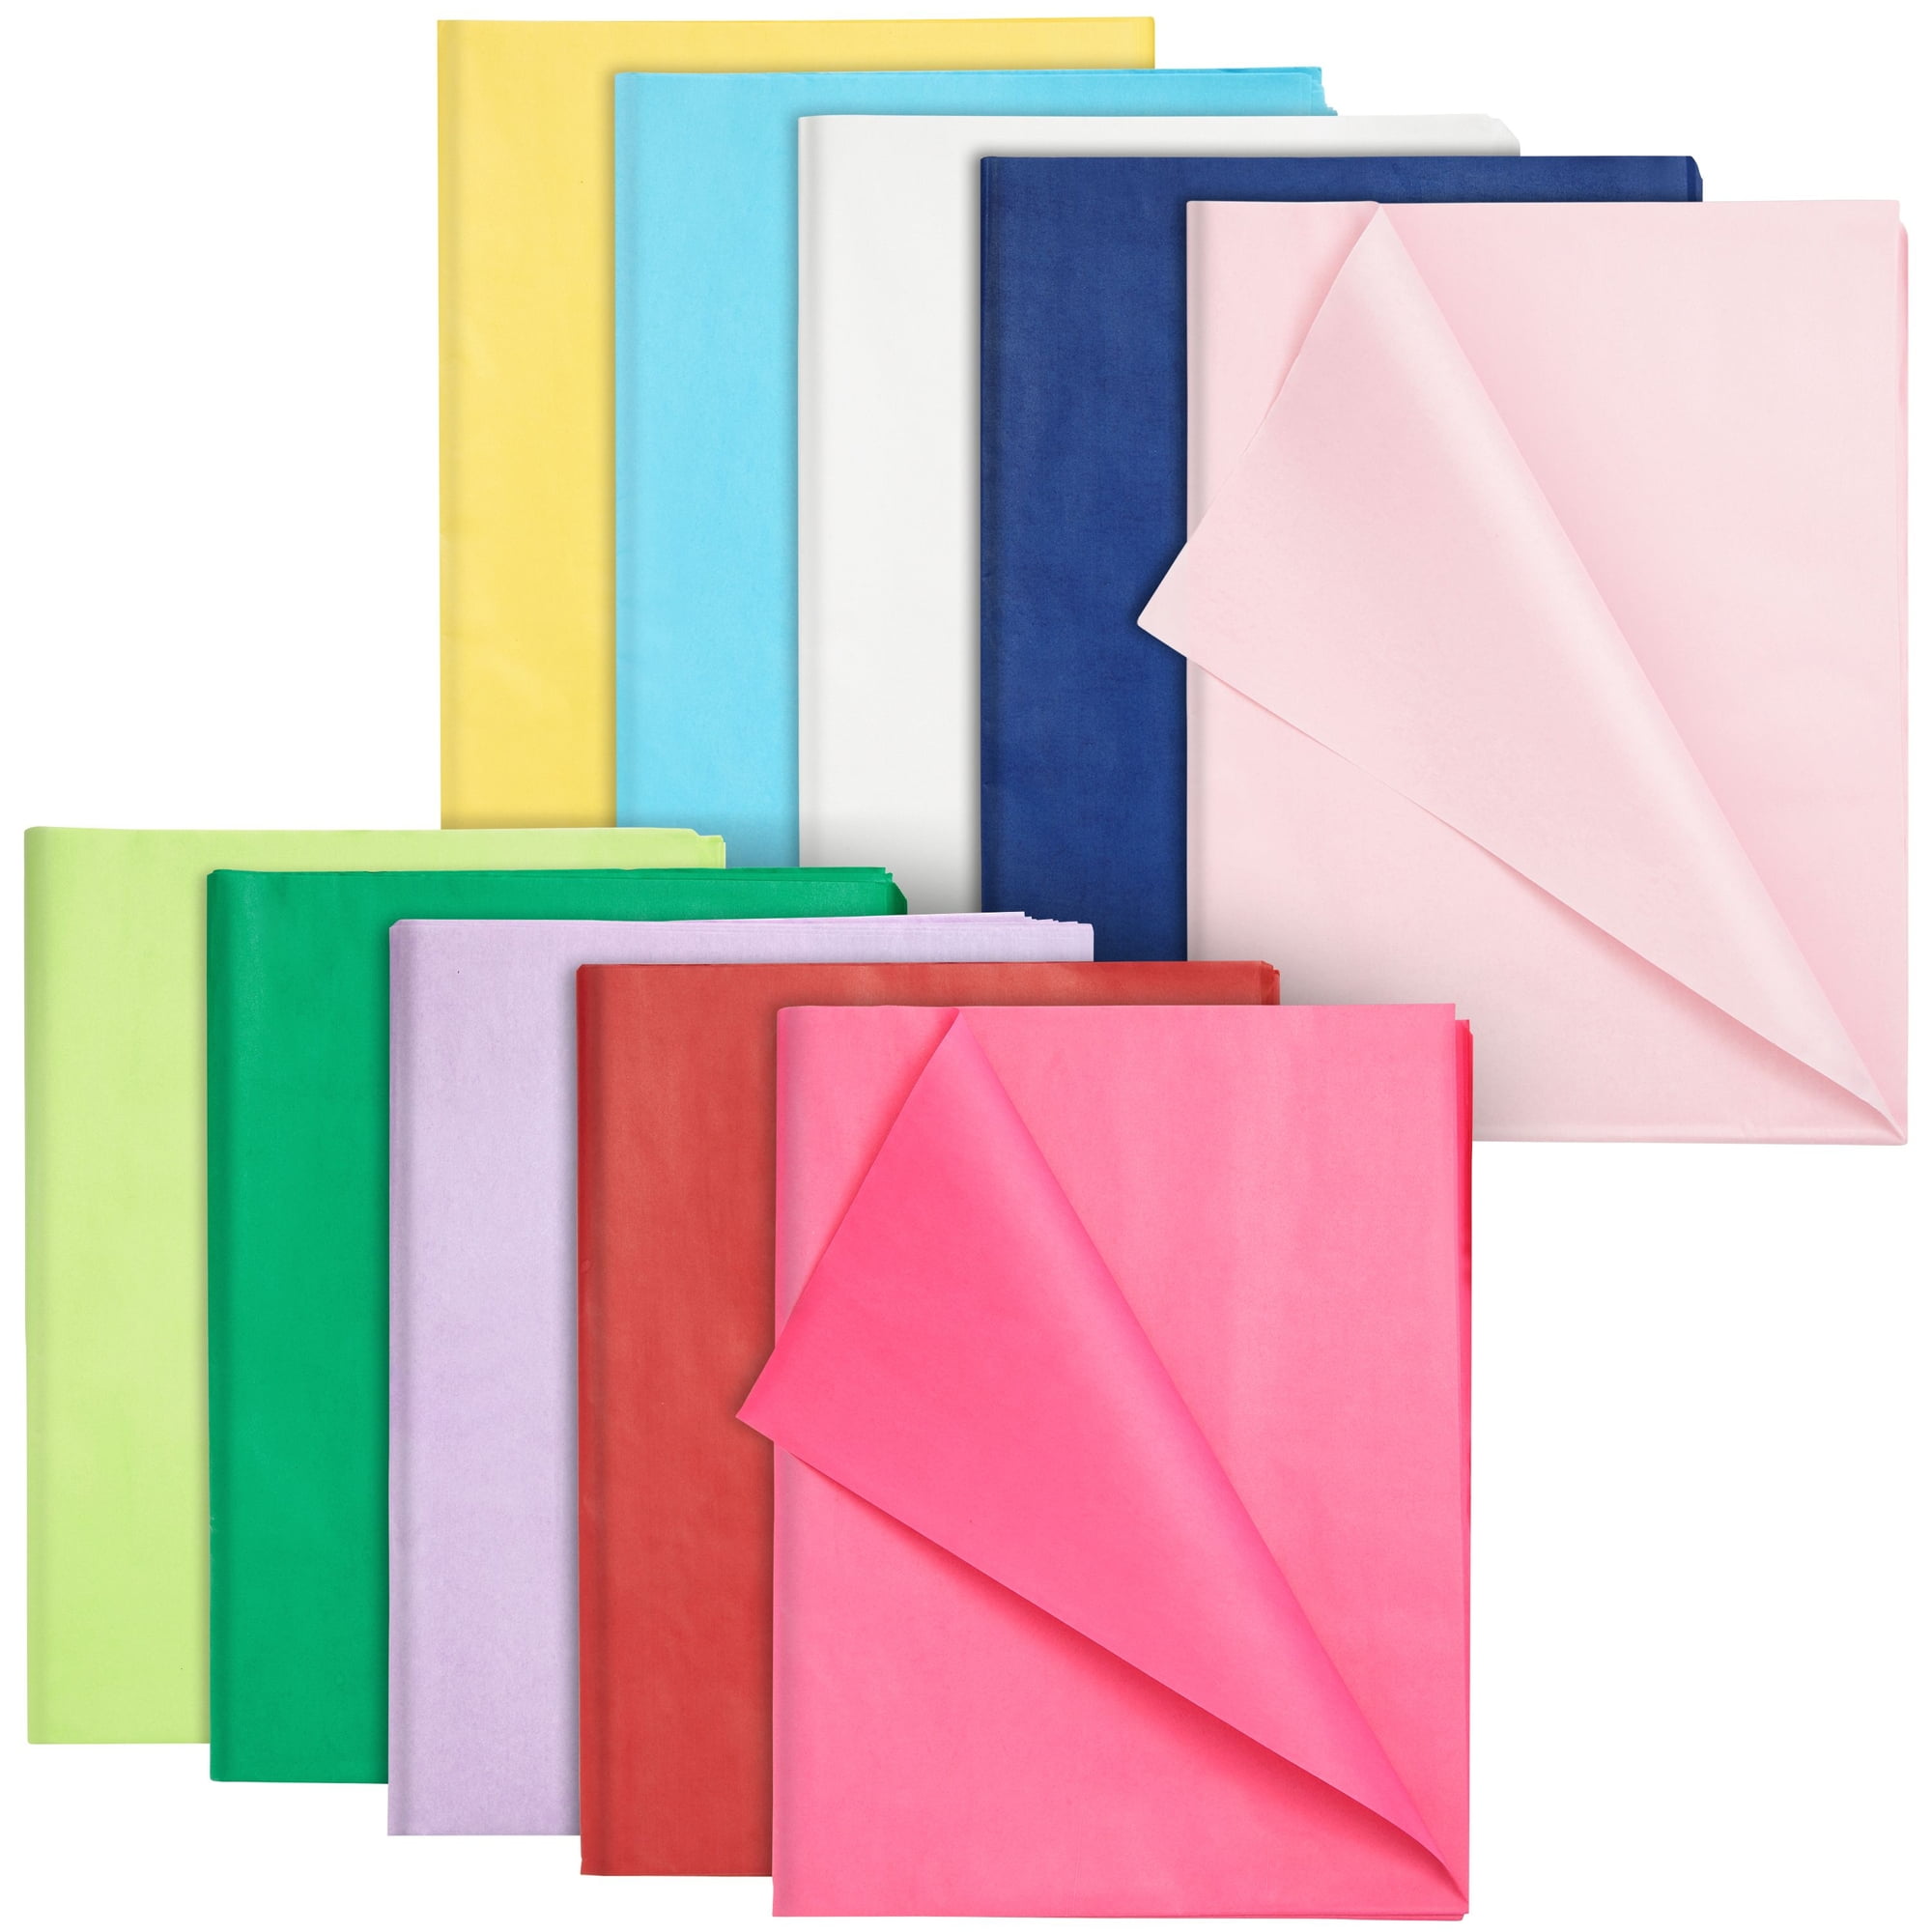  Simetufy 60 Sheets Tissue Paper for Gift Bags, 10